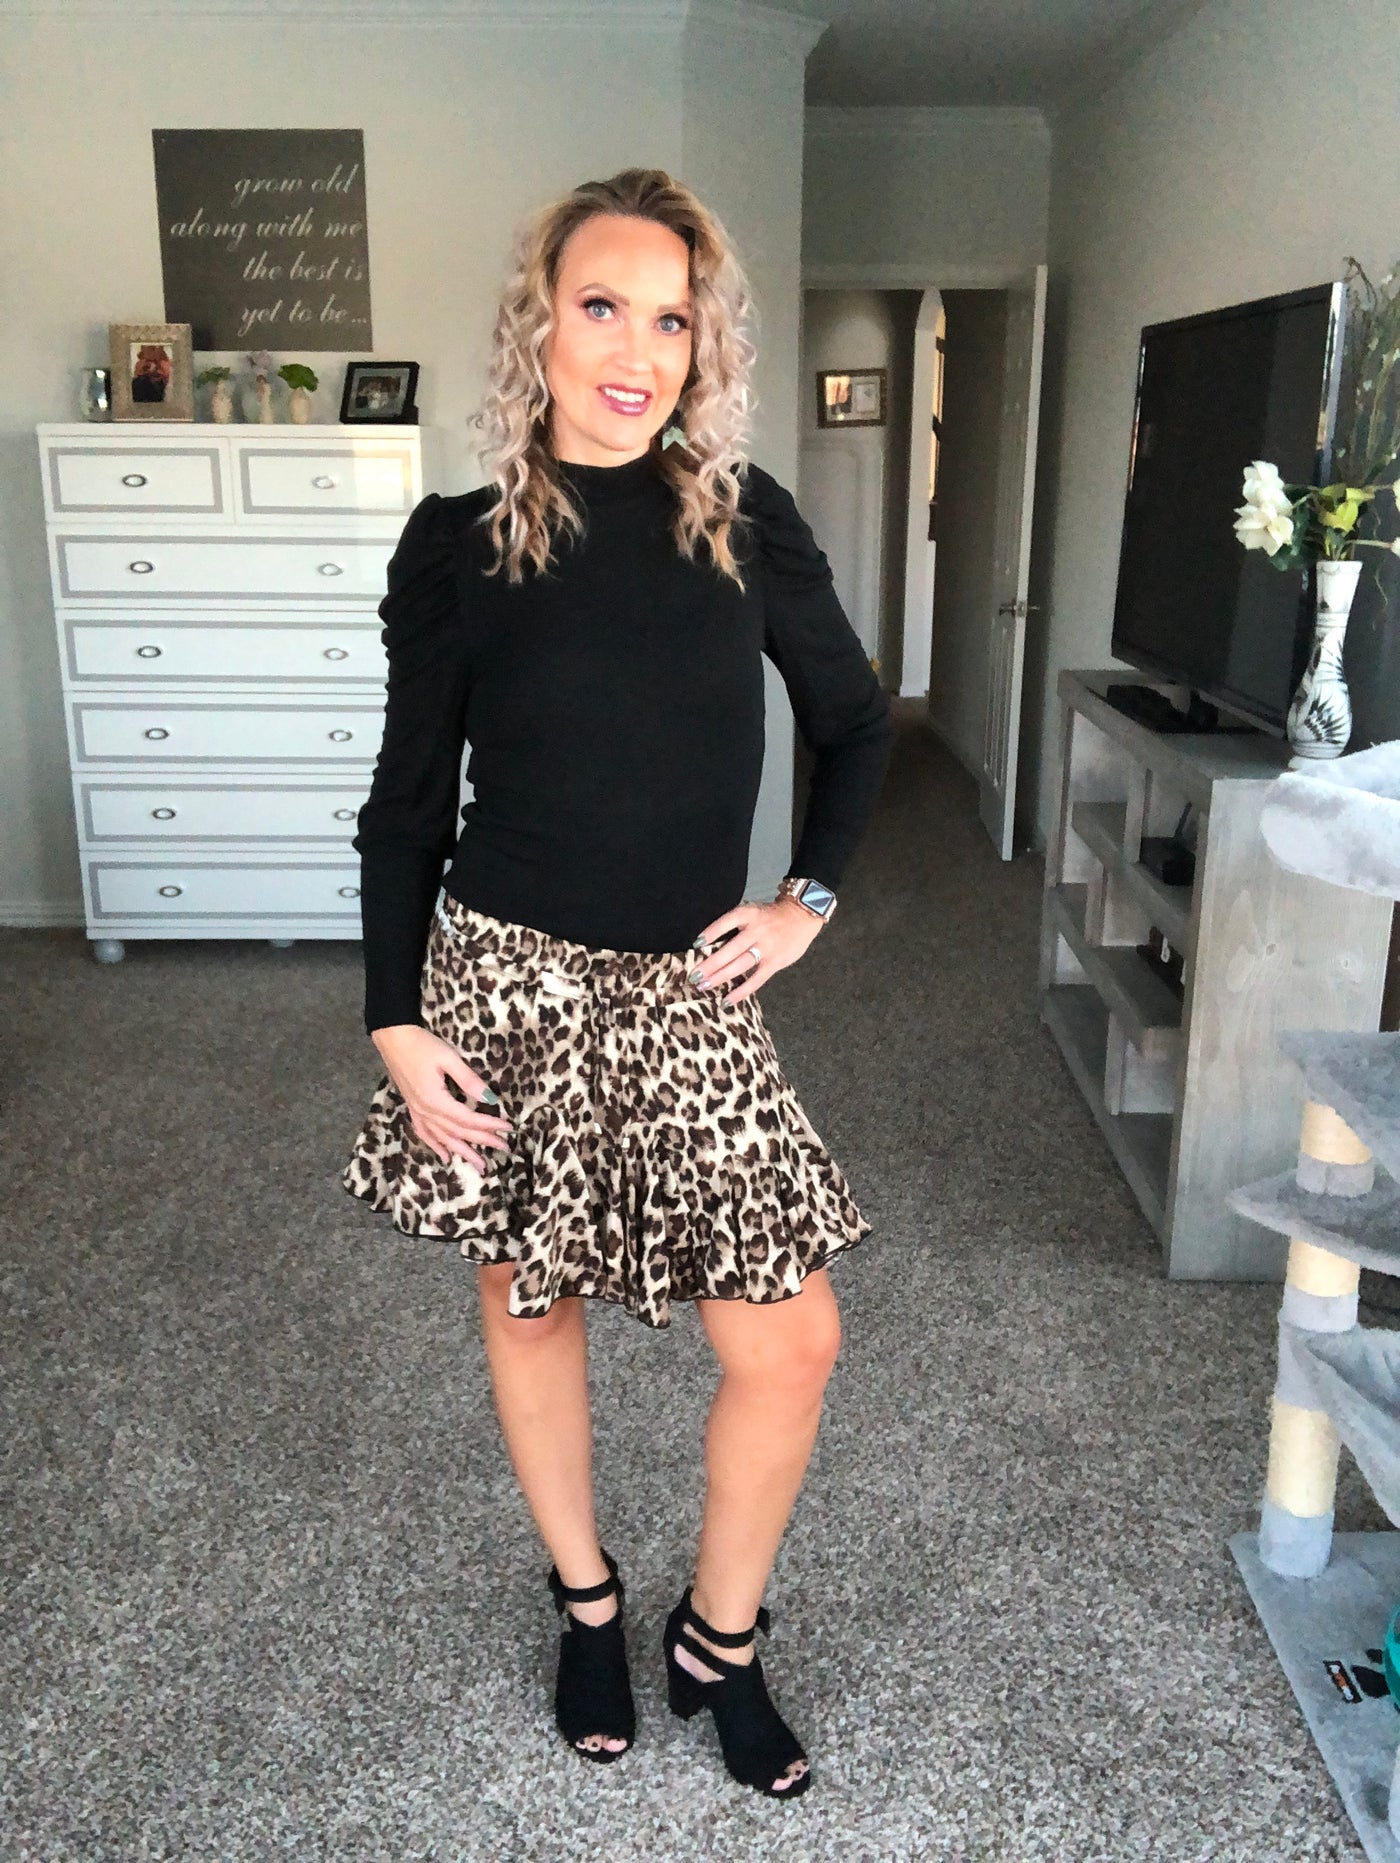 Leopard stretch band skirt